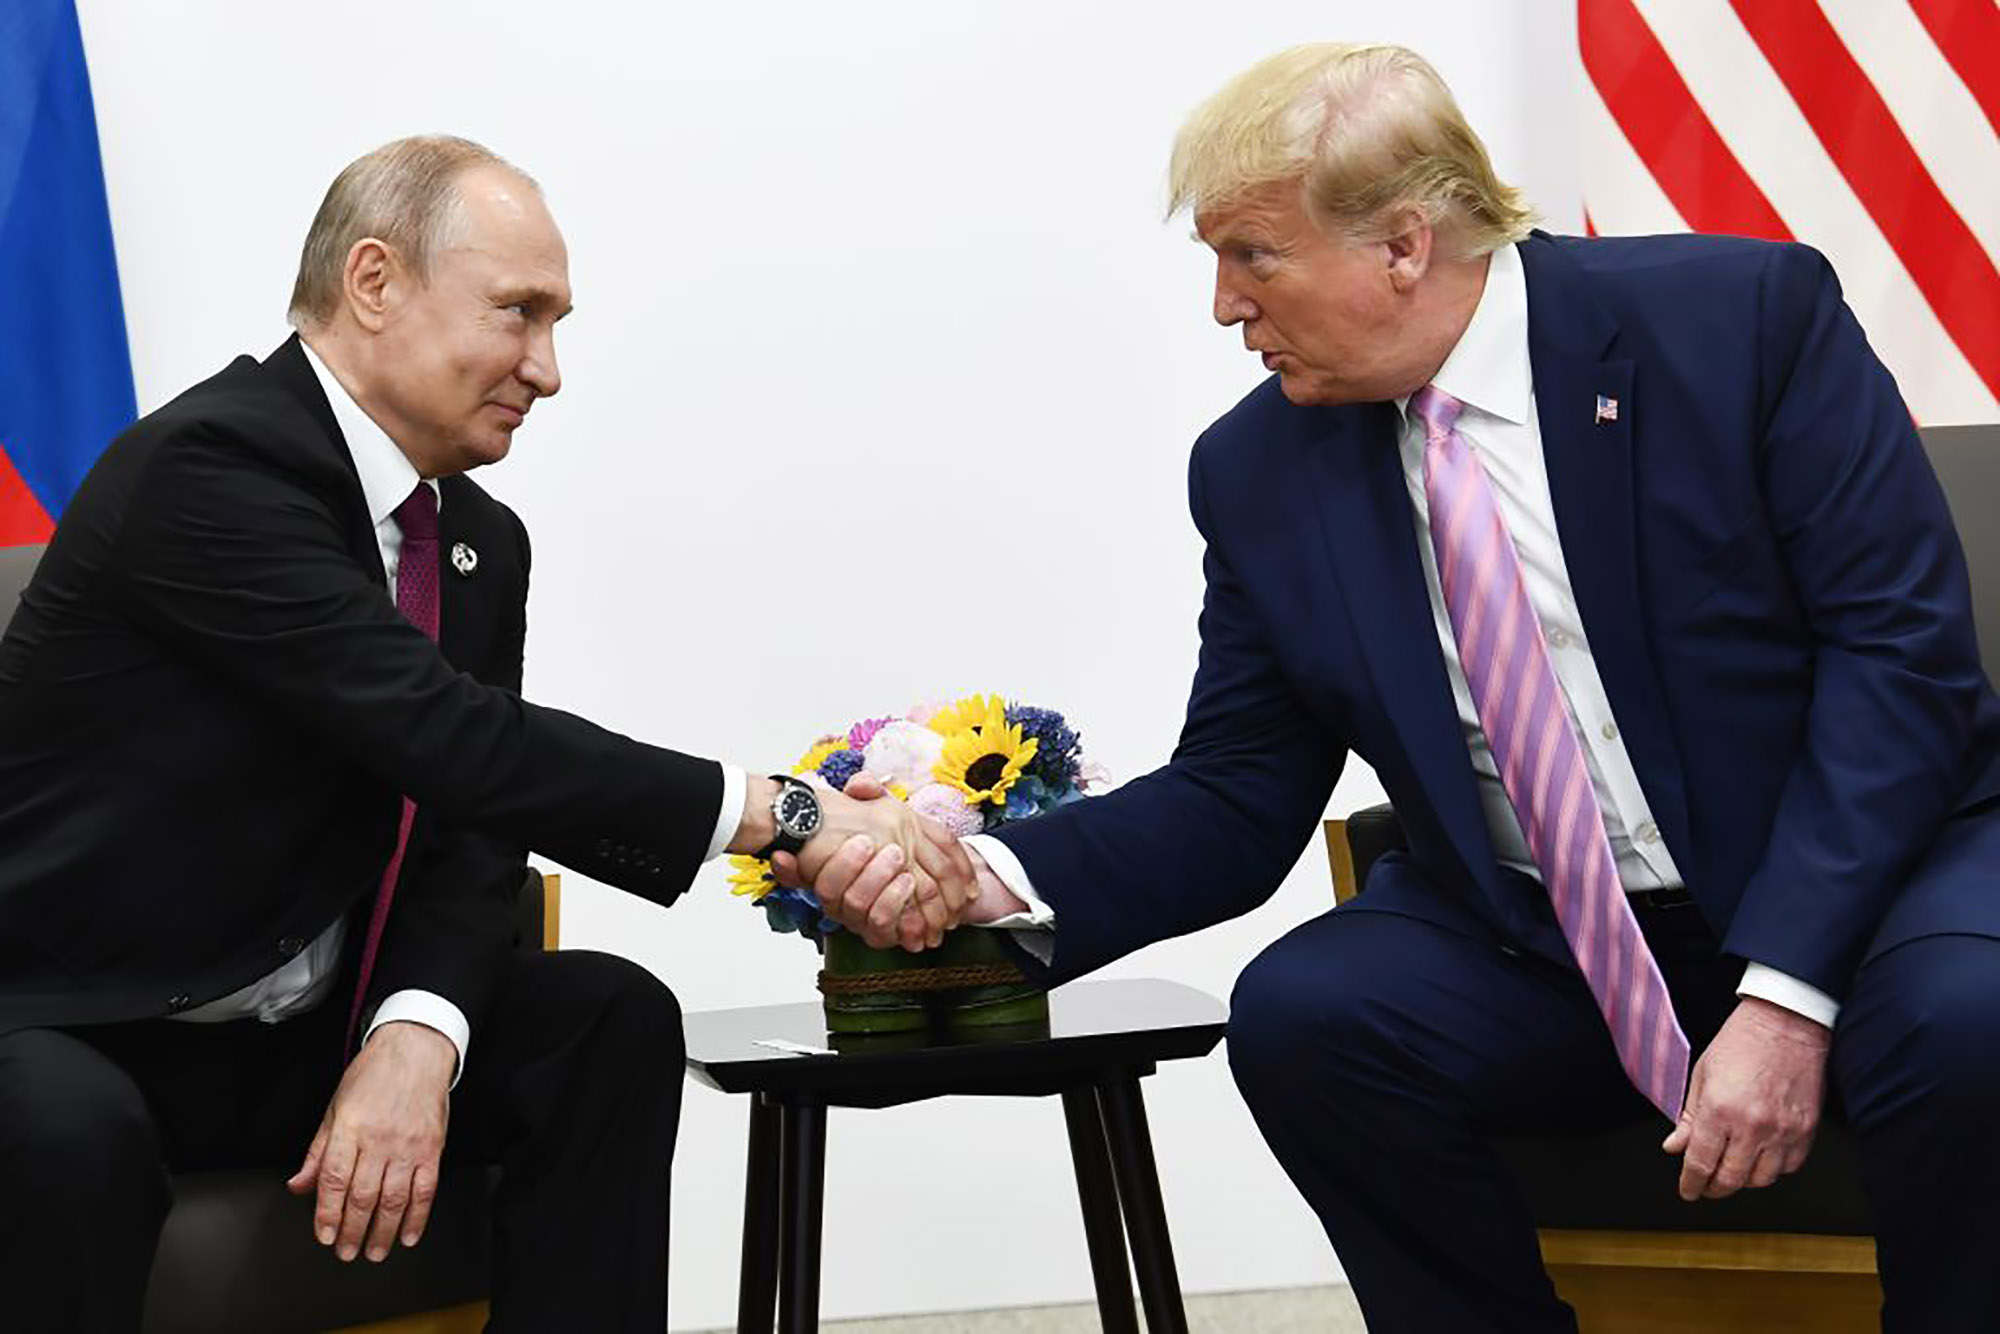 Vladimir Putin and Donald Trump during the G20 summit in Osaka on June 28, 2019.